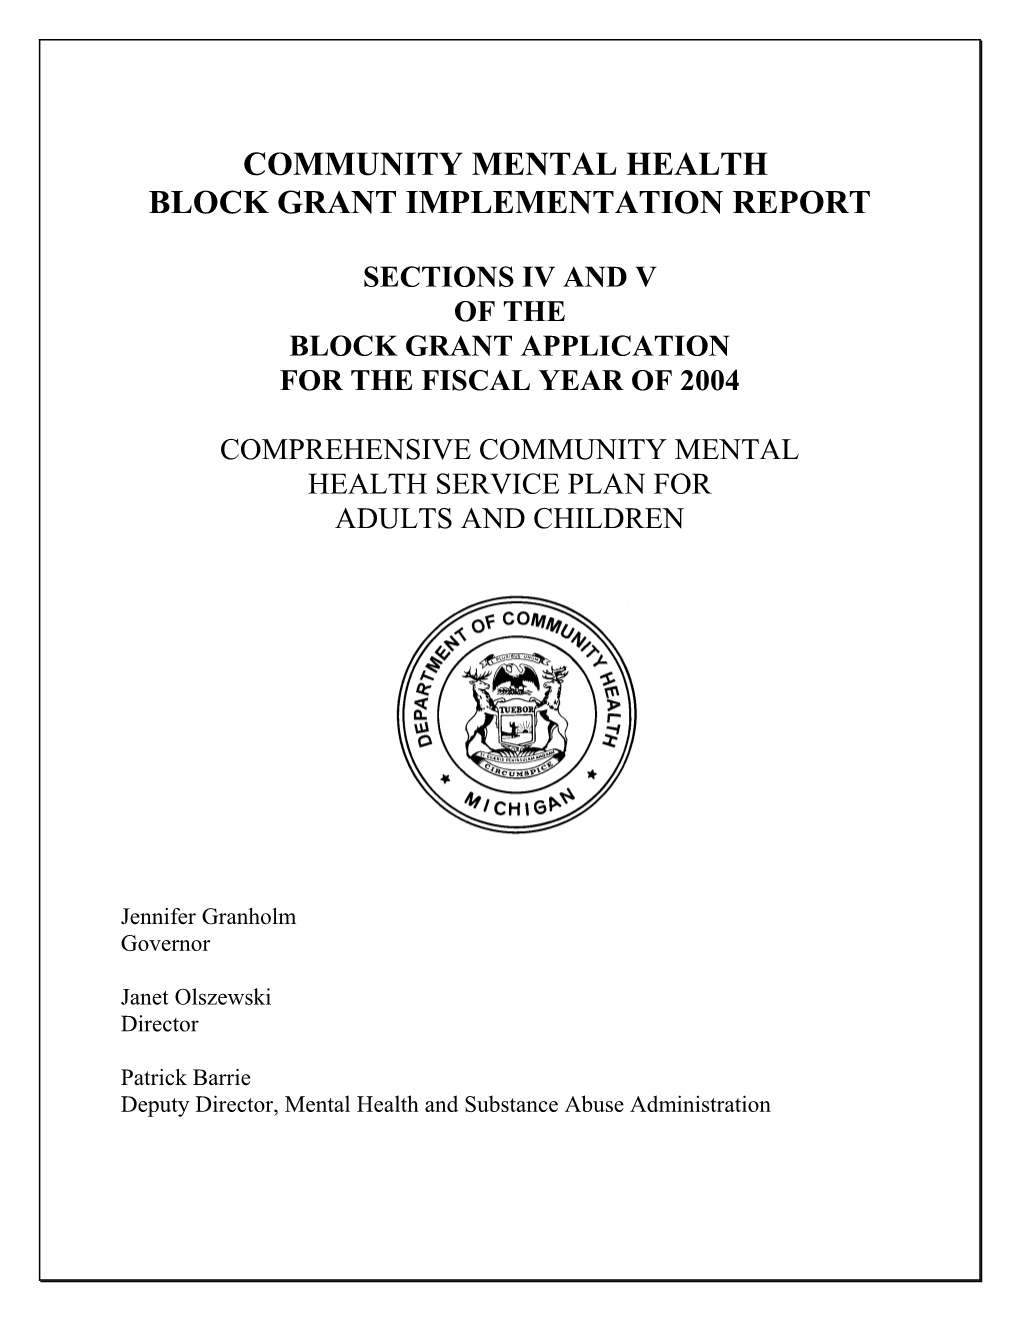 Community Mental Health Block Grant